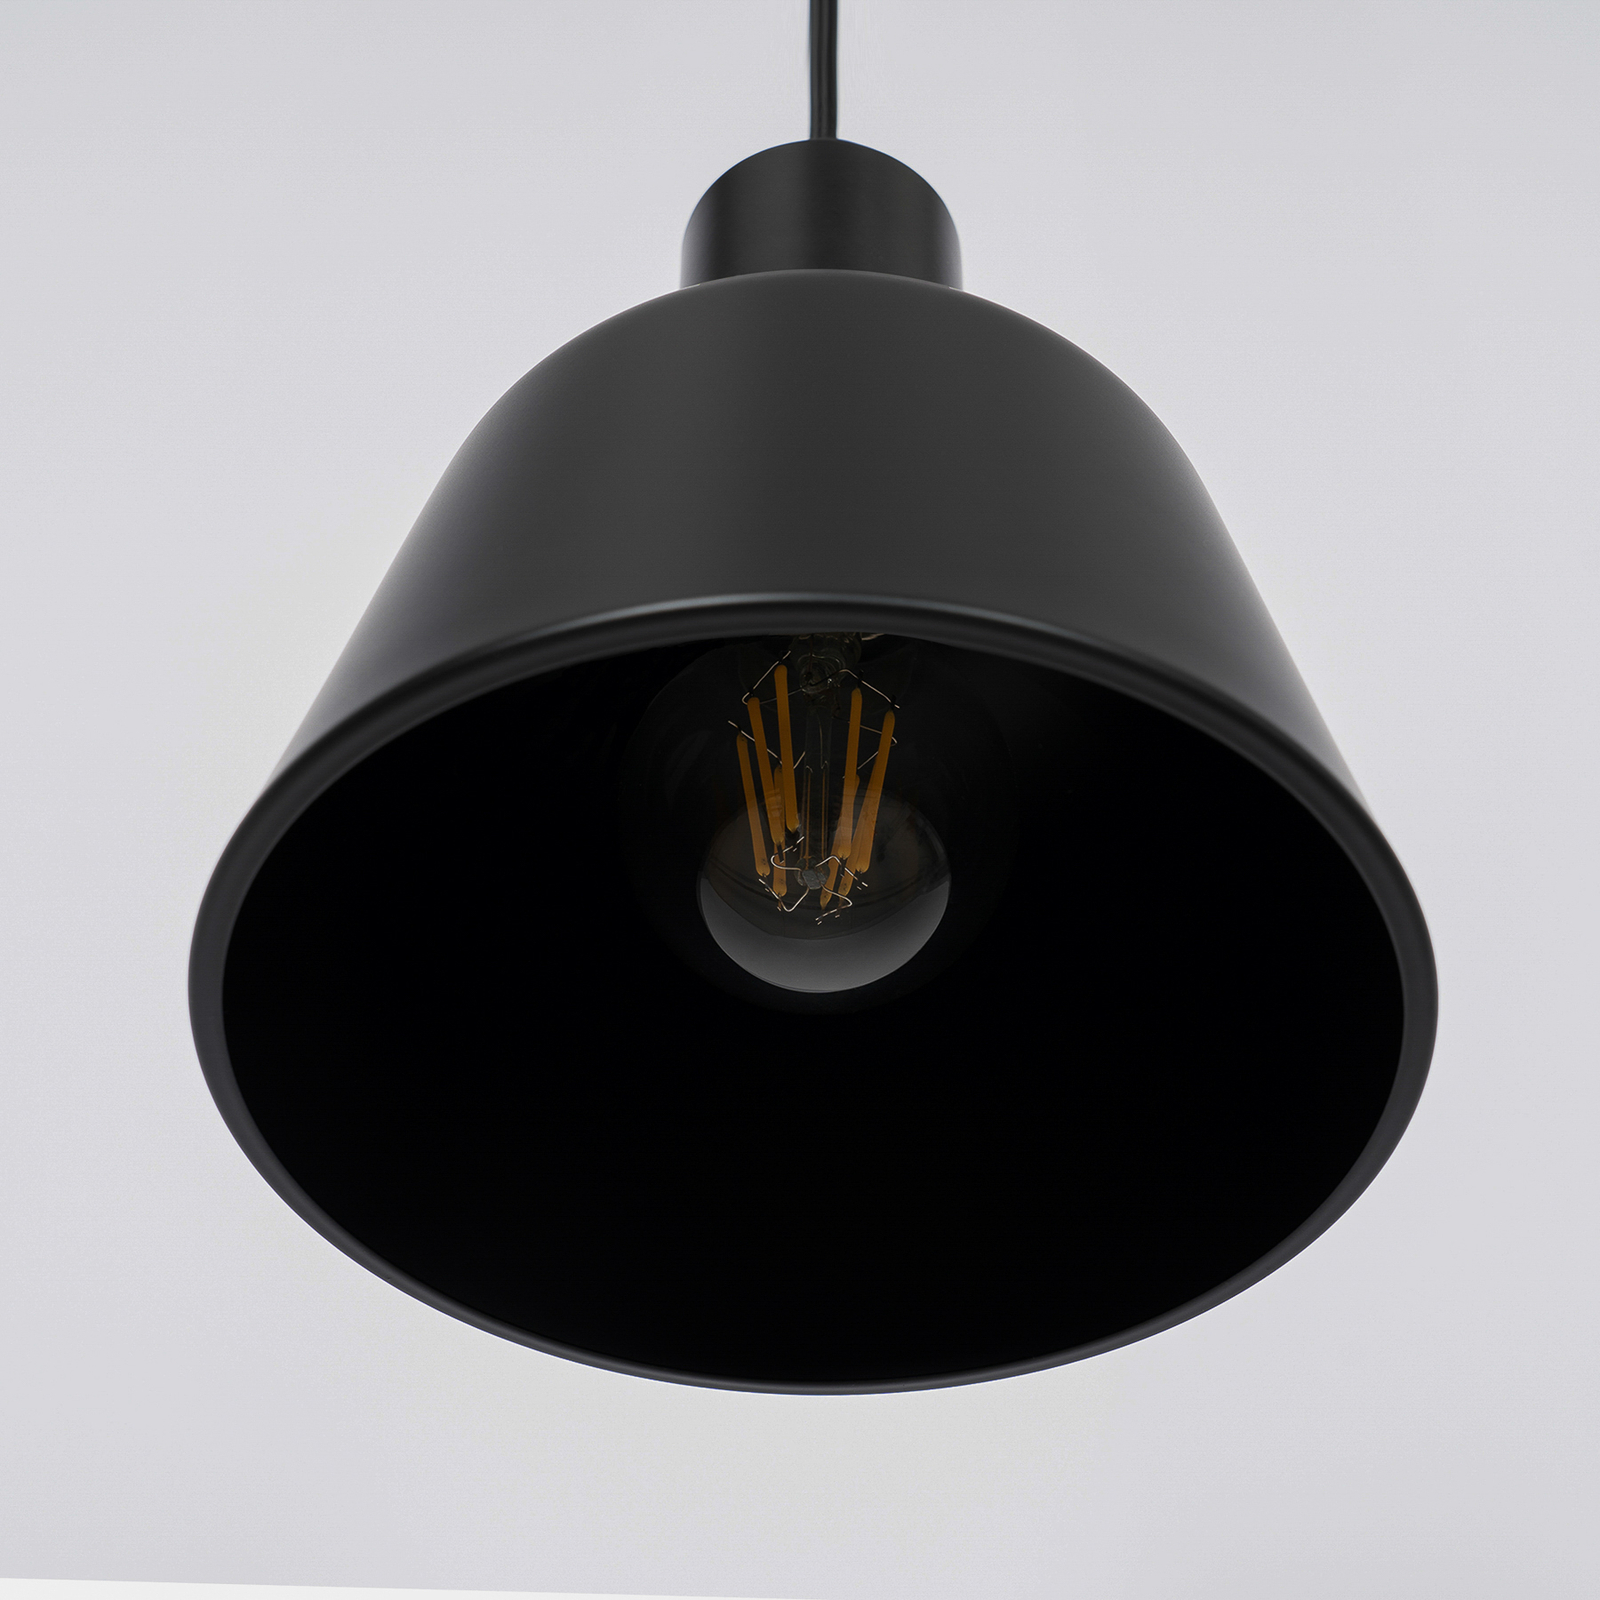 Lucande Servan lámpara colgante, negro, 1 luz